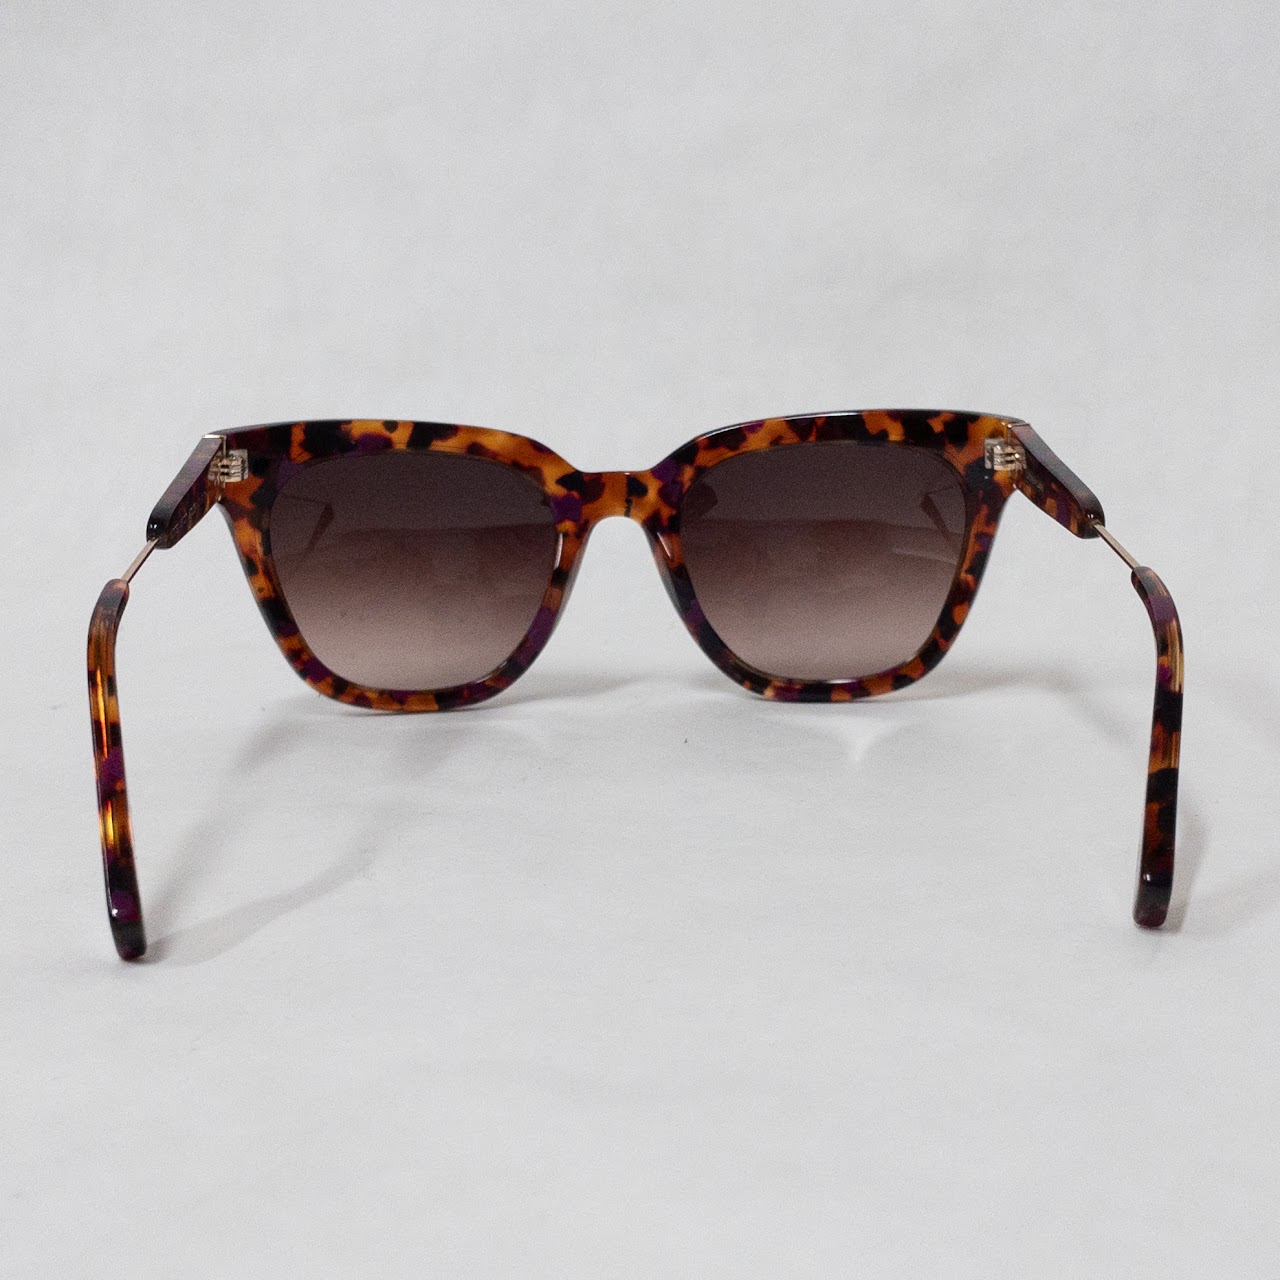 Derek Lam Astor Sunglasses